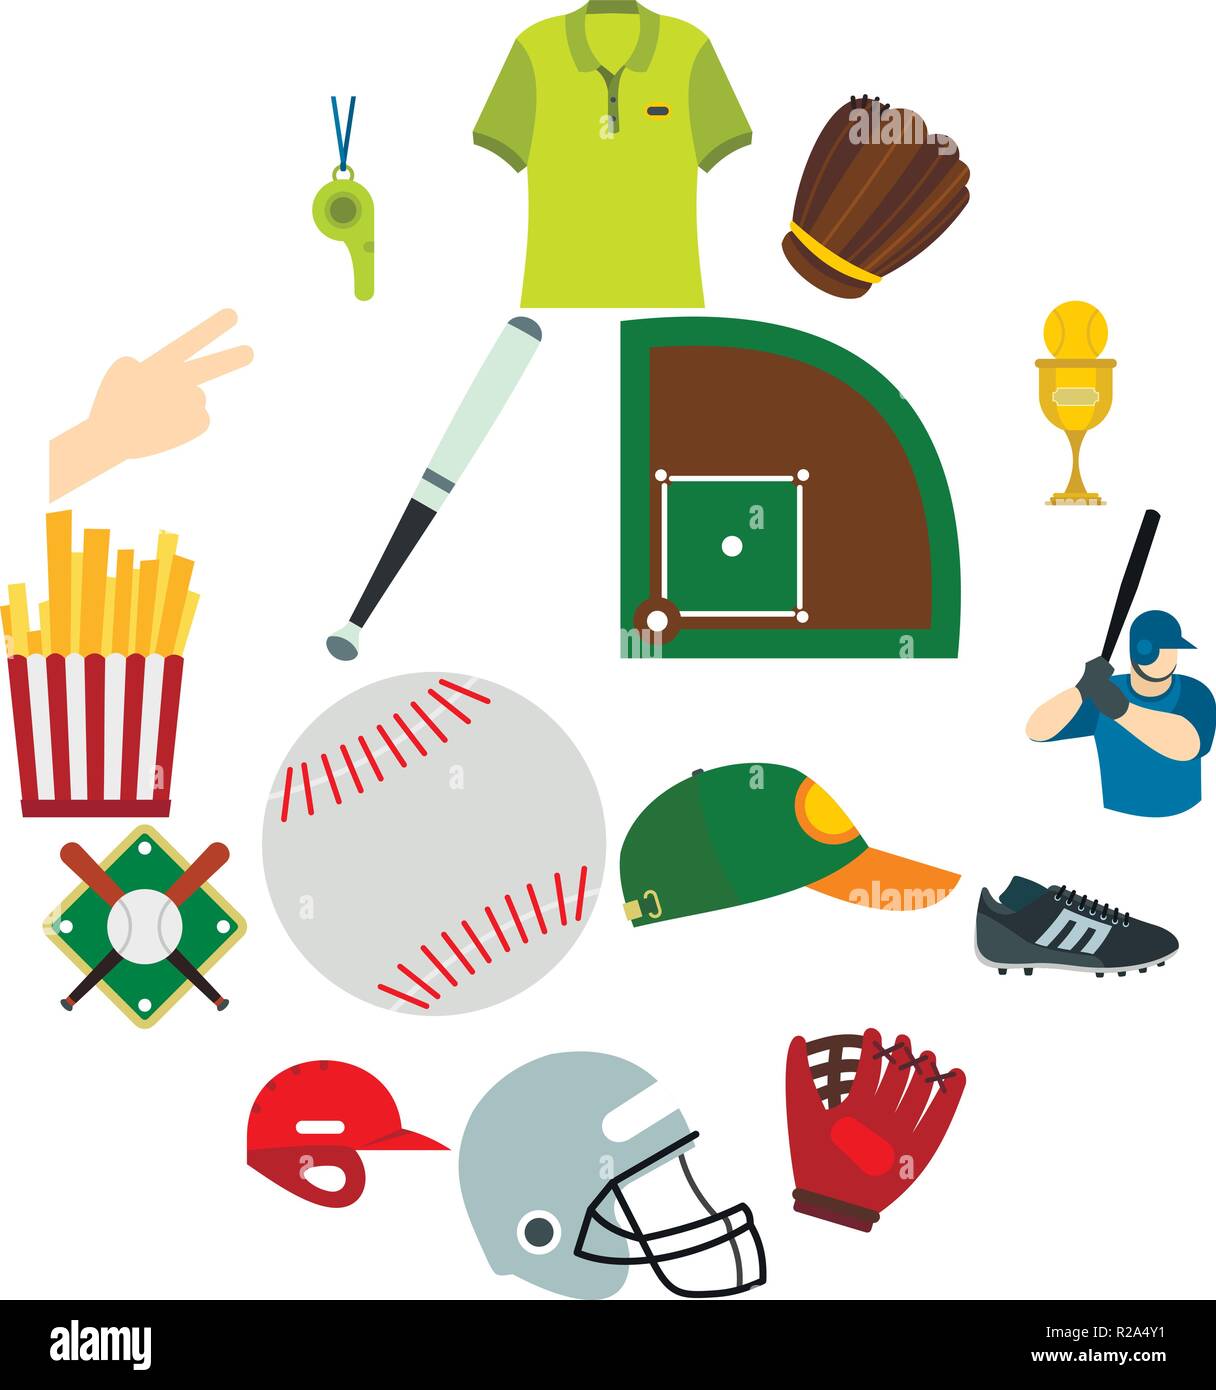 American Football flachbild Symbole für Web und mobile Geräte Stock Vektor